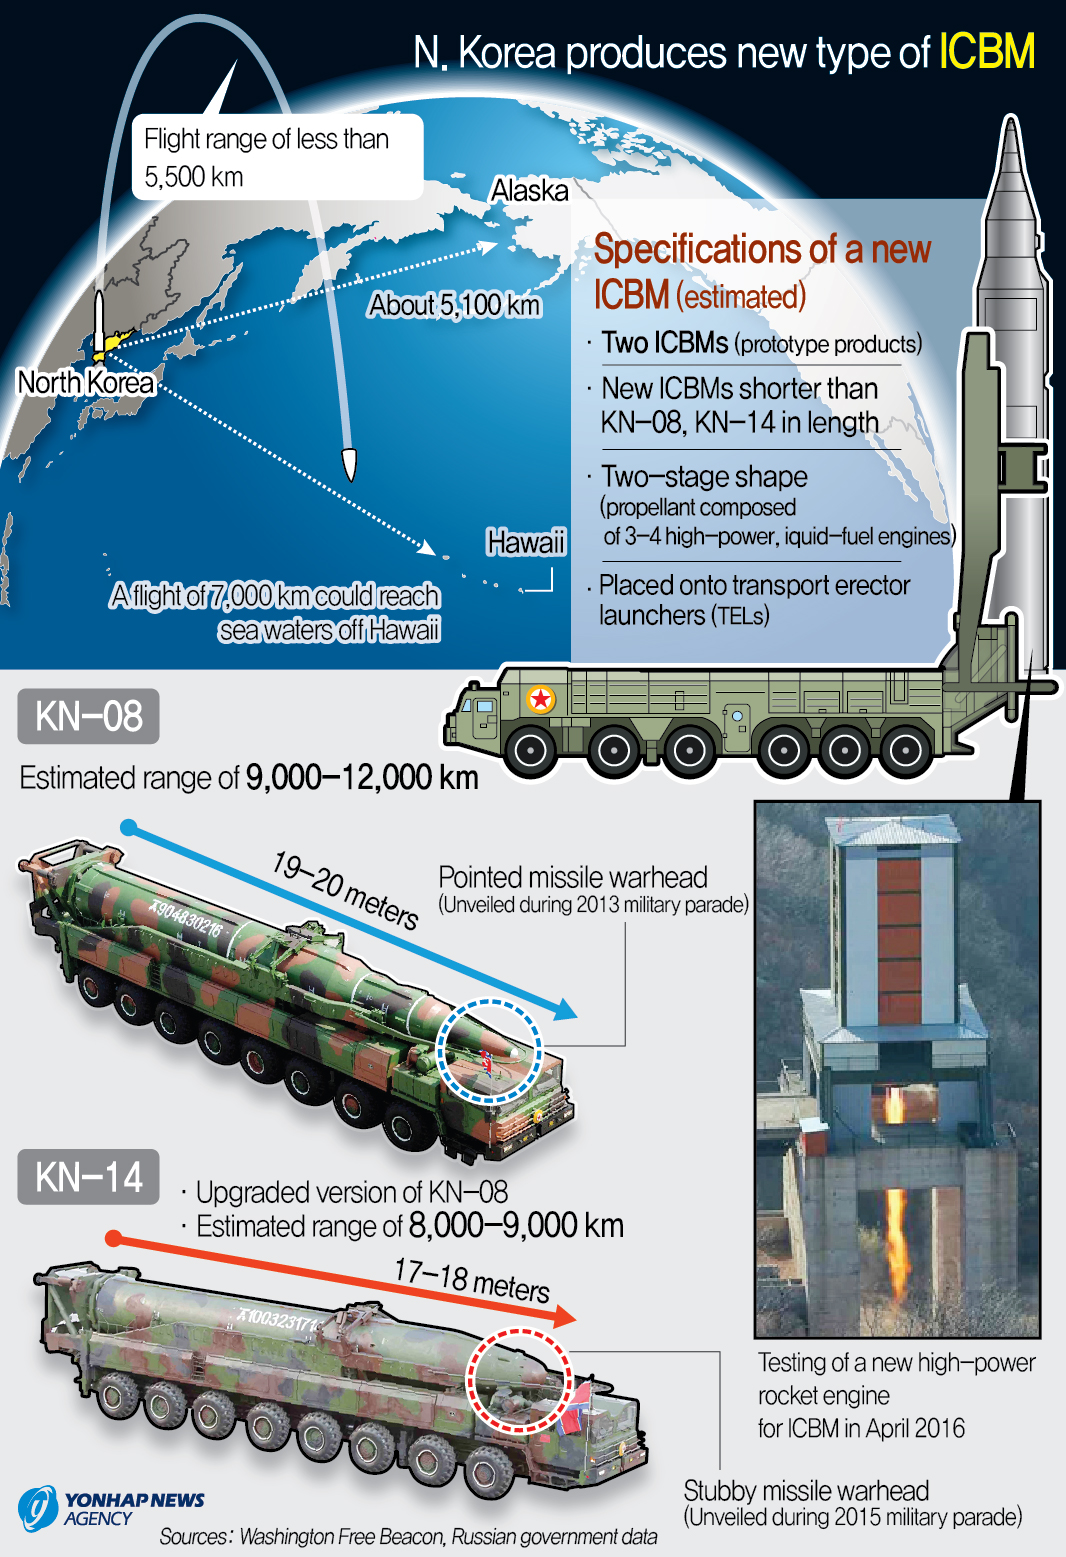 N. Korea produces new type of ICBM